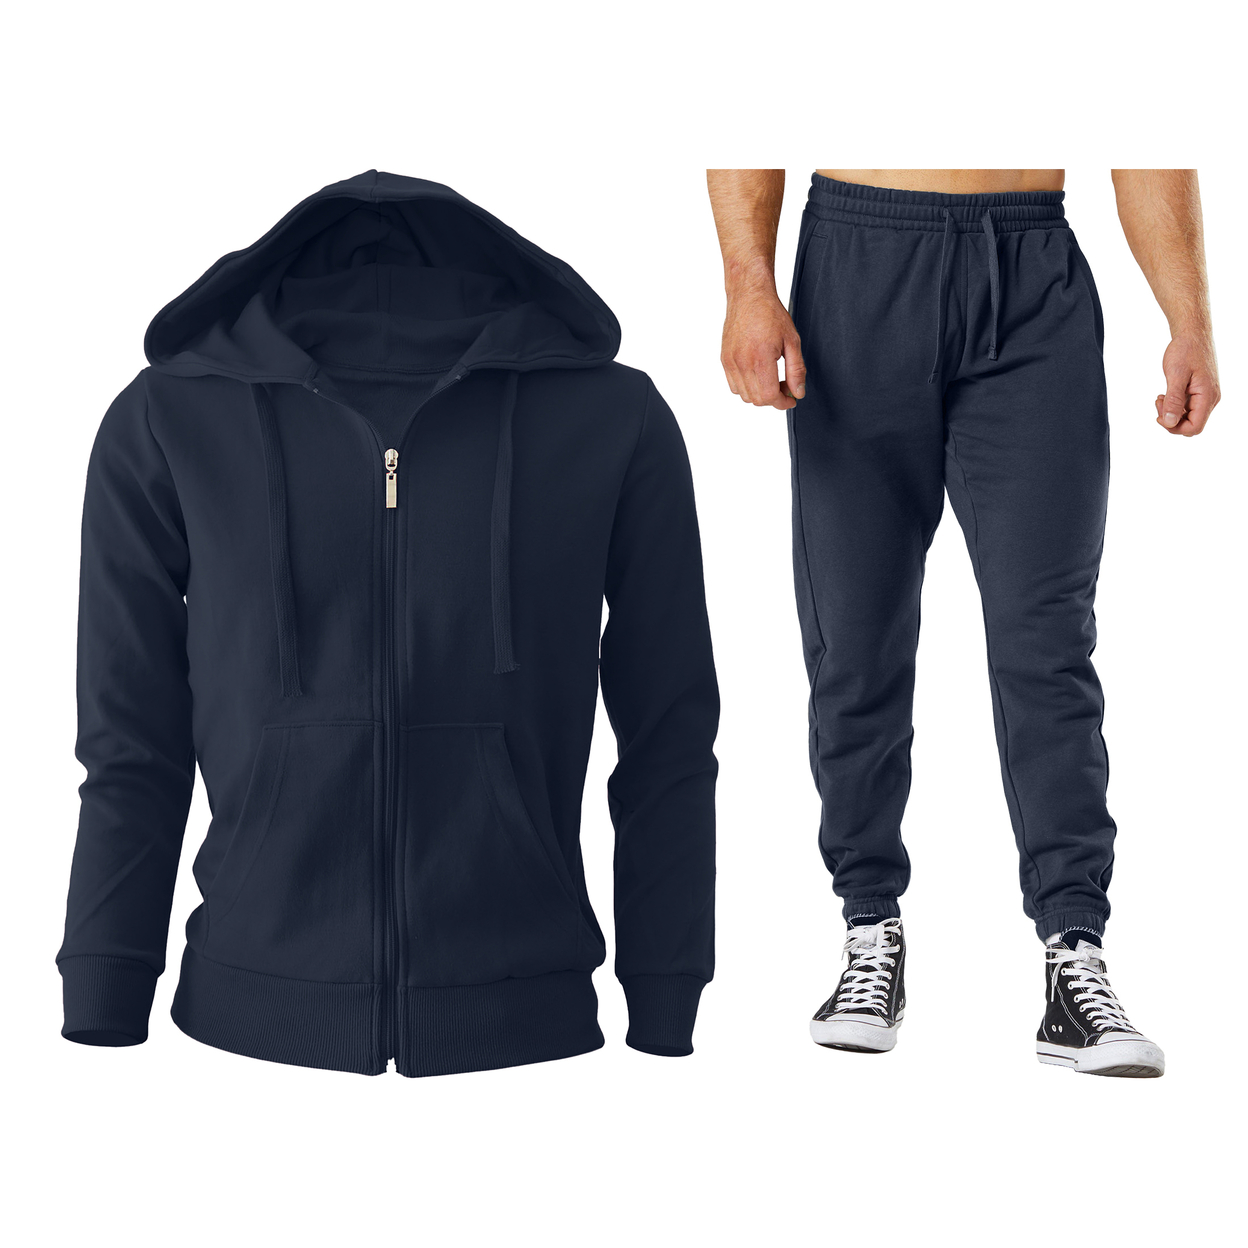 2/4-Piece: Men's Winter Warm Cozy Athletic Multi-Pockets BIG & TALL Sweatsuit Set - Navy, 1, 3xl